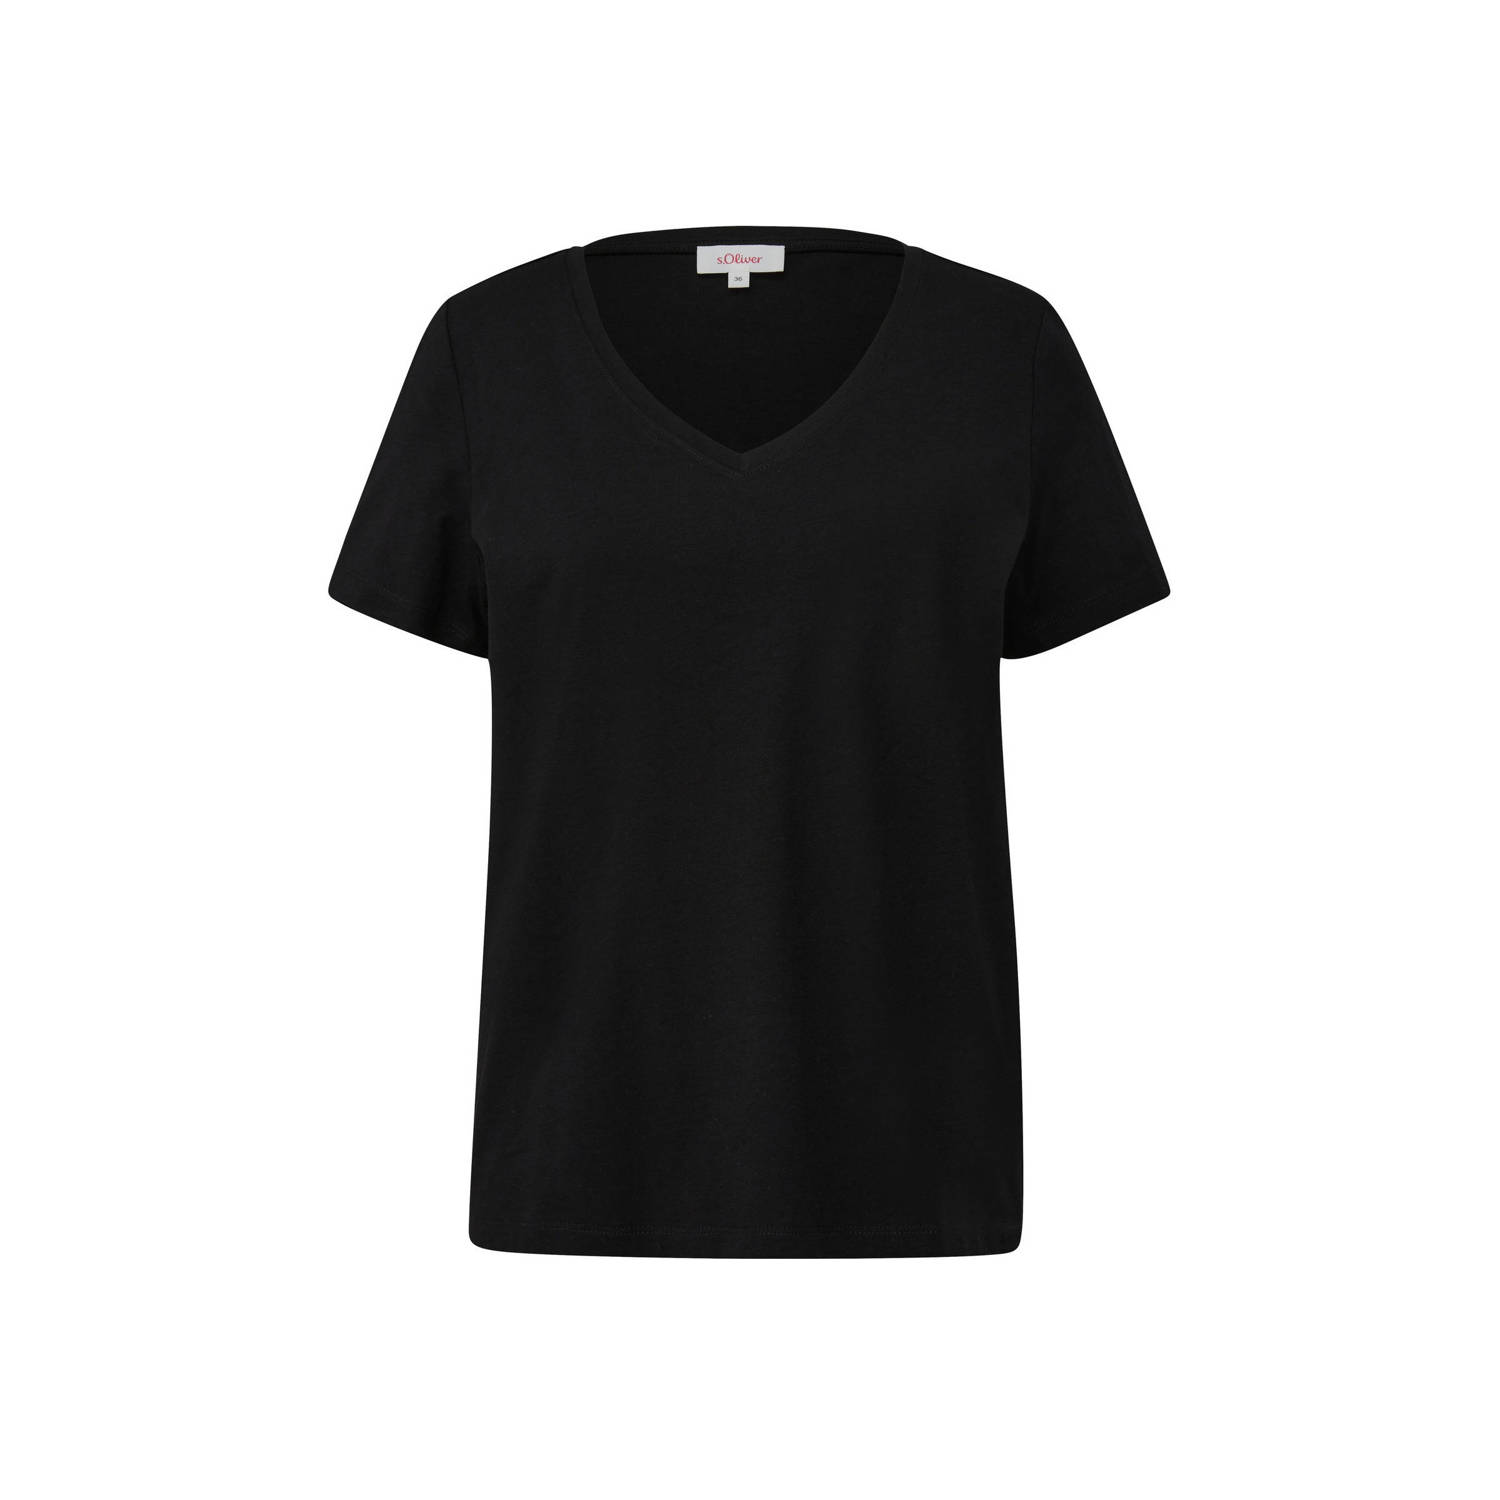 S.Oliver T-shirt zwart